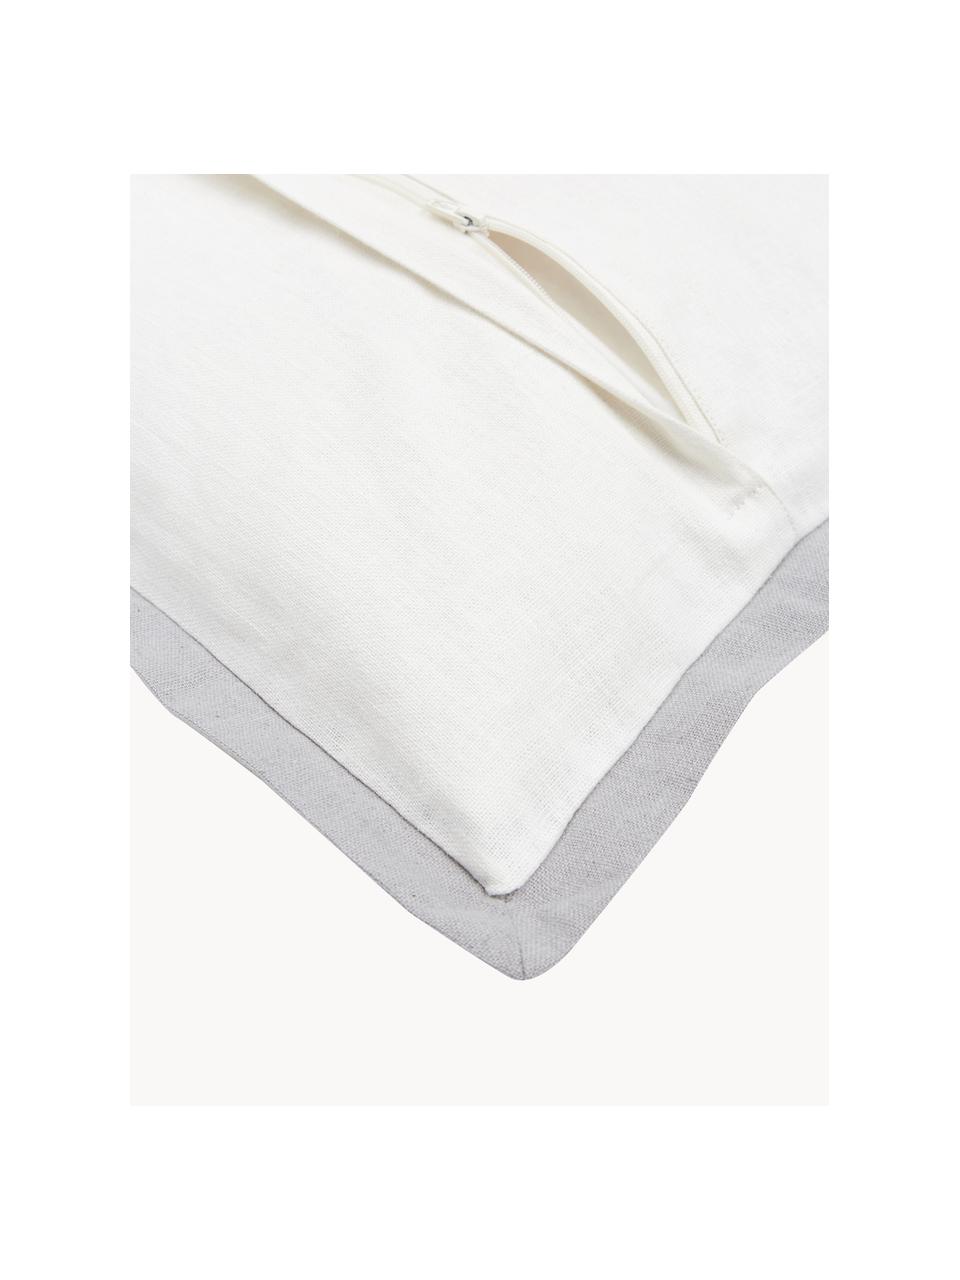 Housse de coussin lin blanc 45x45 Mira, 51 % lin, 49 % coton, Blanc, larg. 45 x long. 45 cm